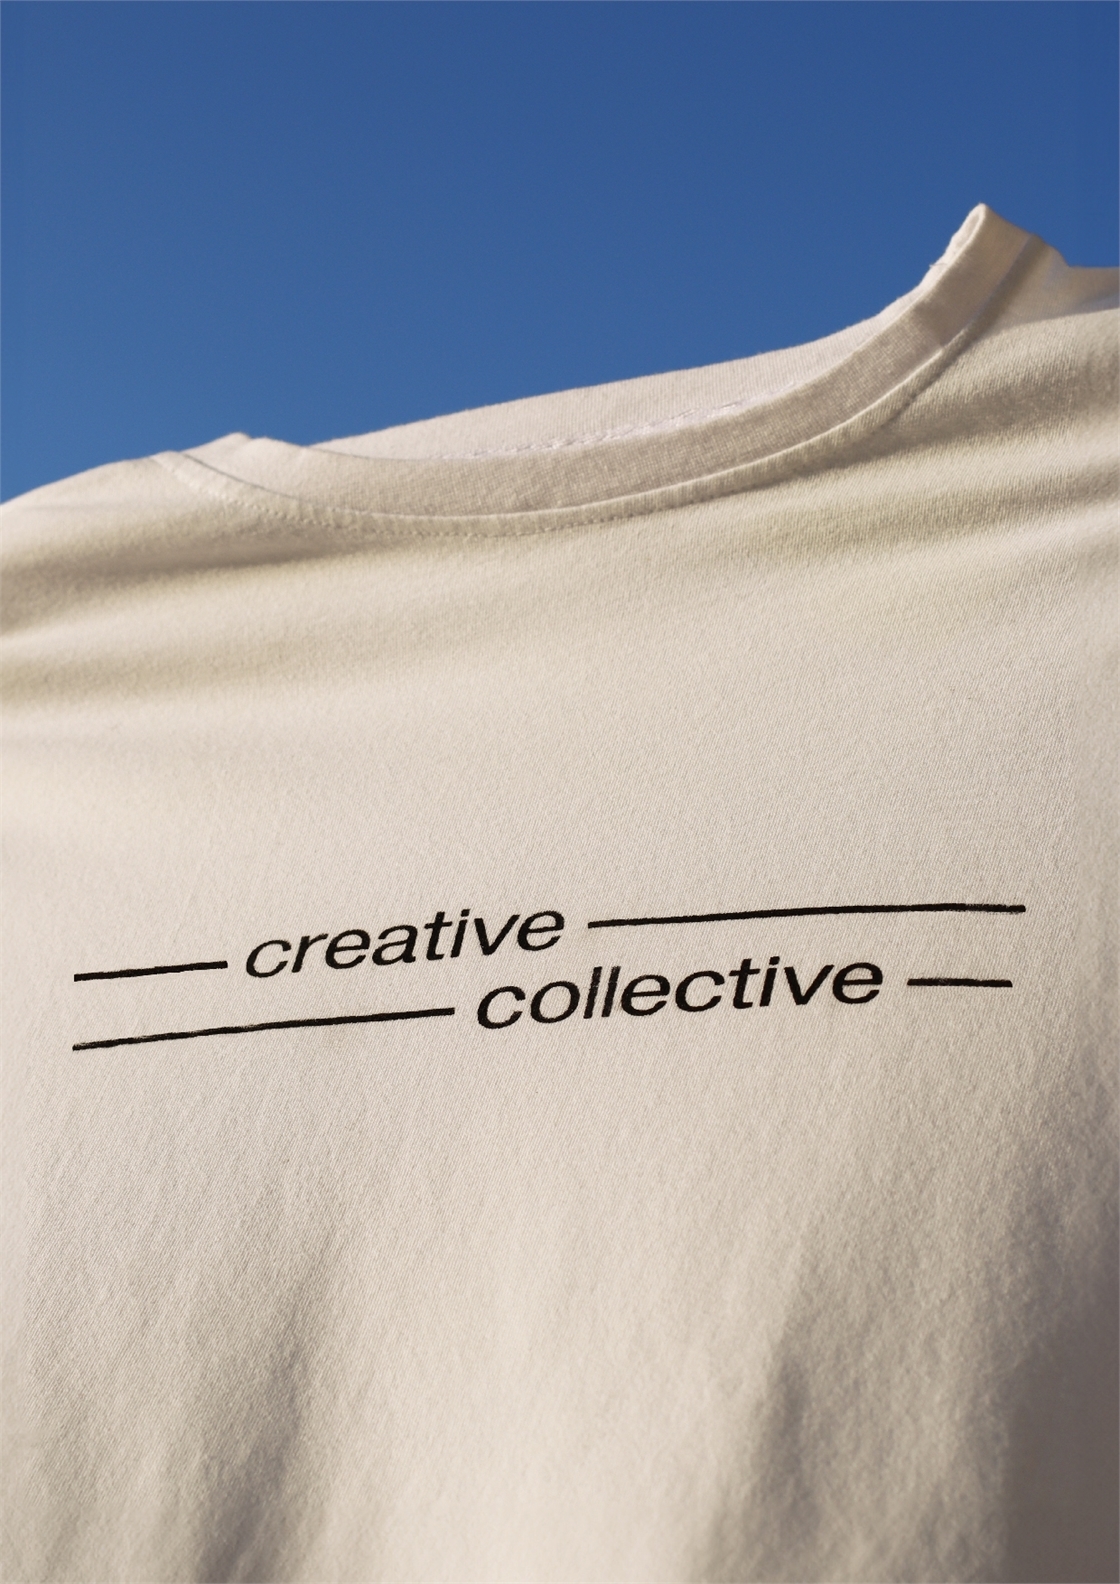 Creative collection